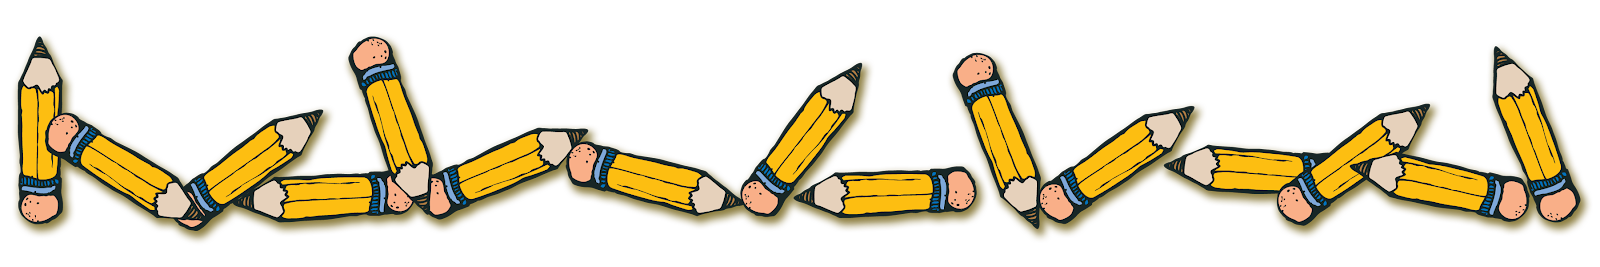 Pencils image